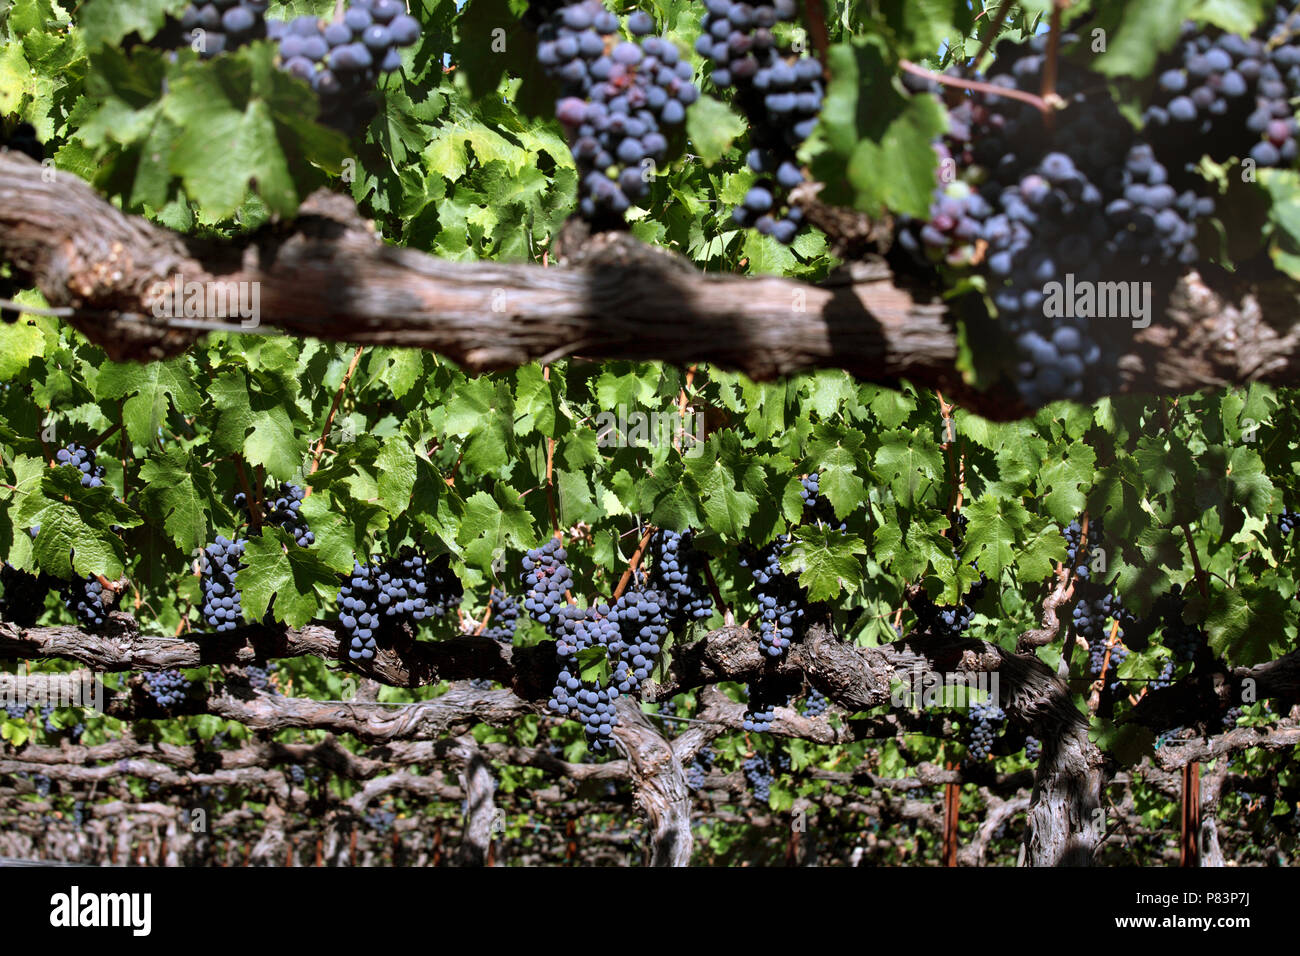 Cabernet Sauvignon grapes growing on vines, Napa Valley, California, USA Stock Photo